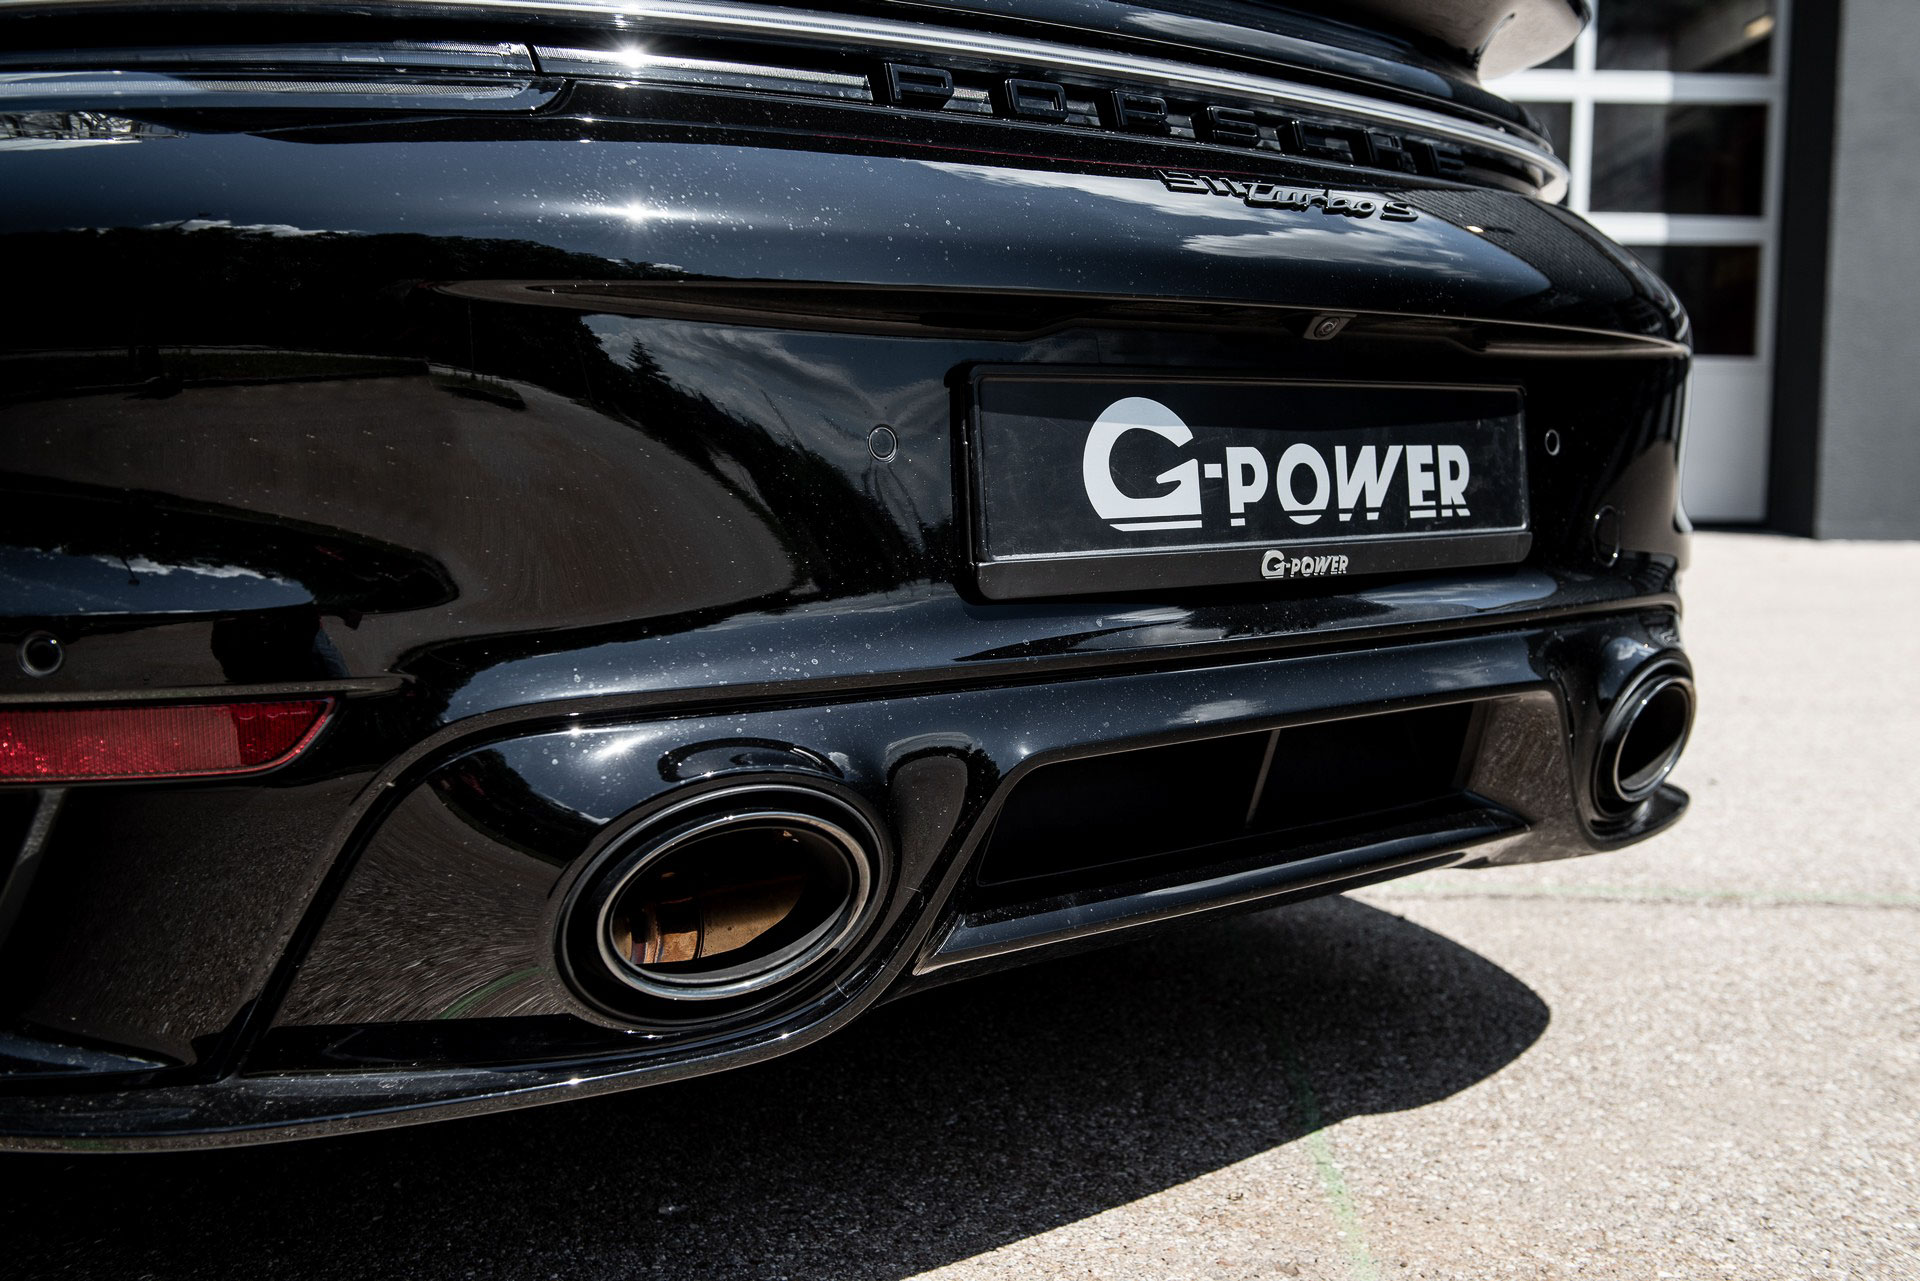 Porsche 911 Turbo S G Power (6).JPG